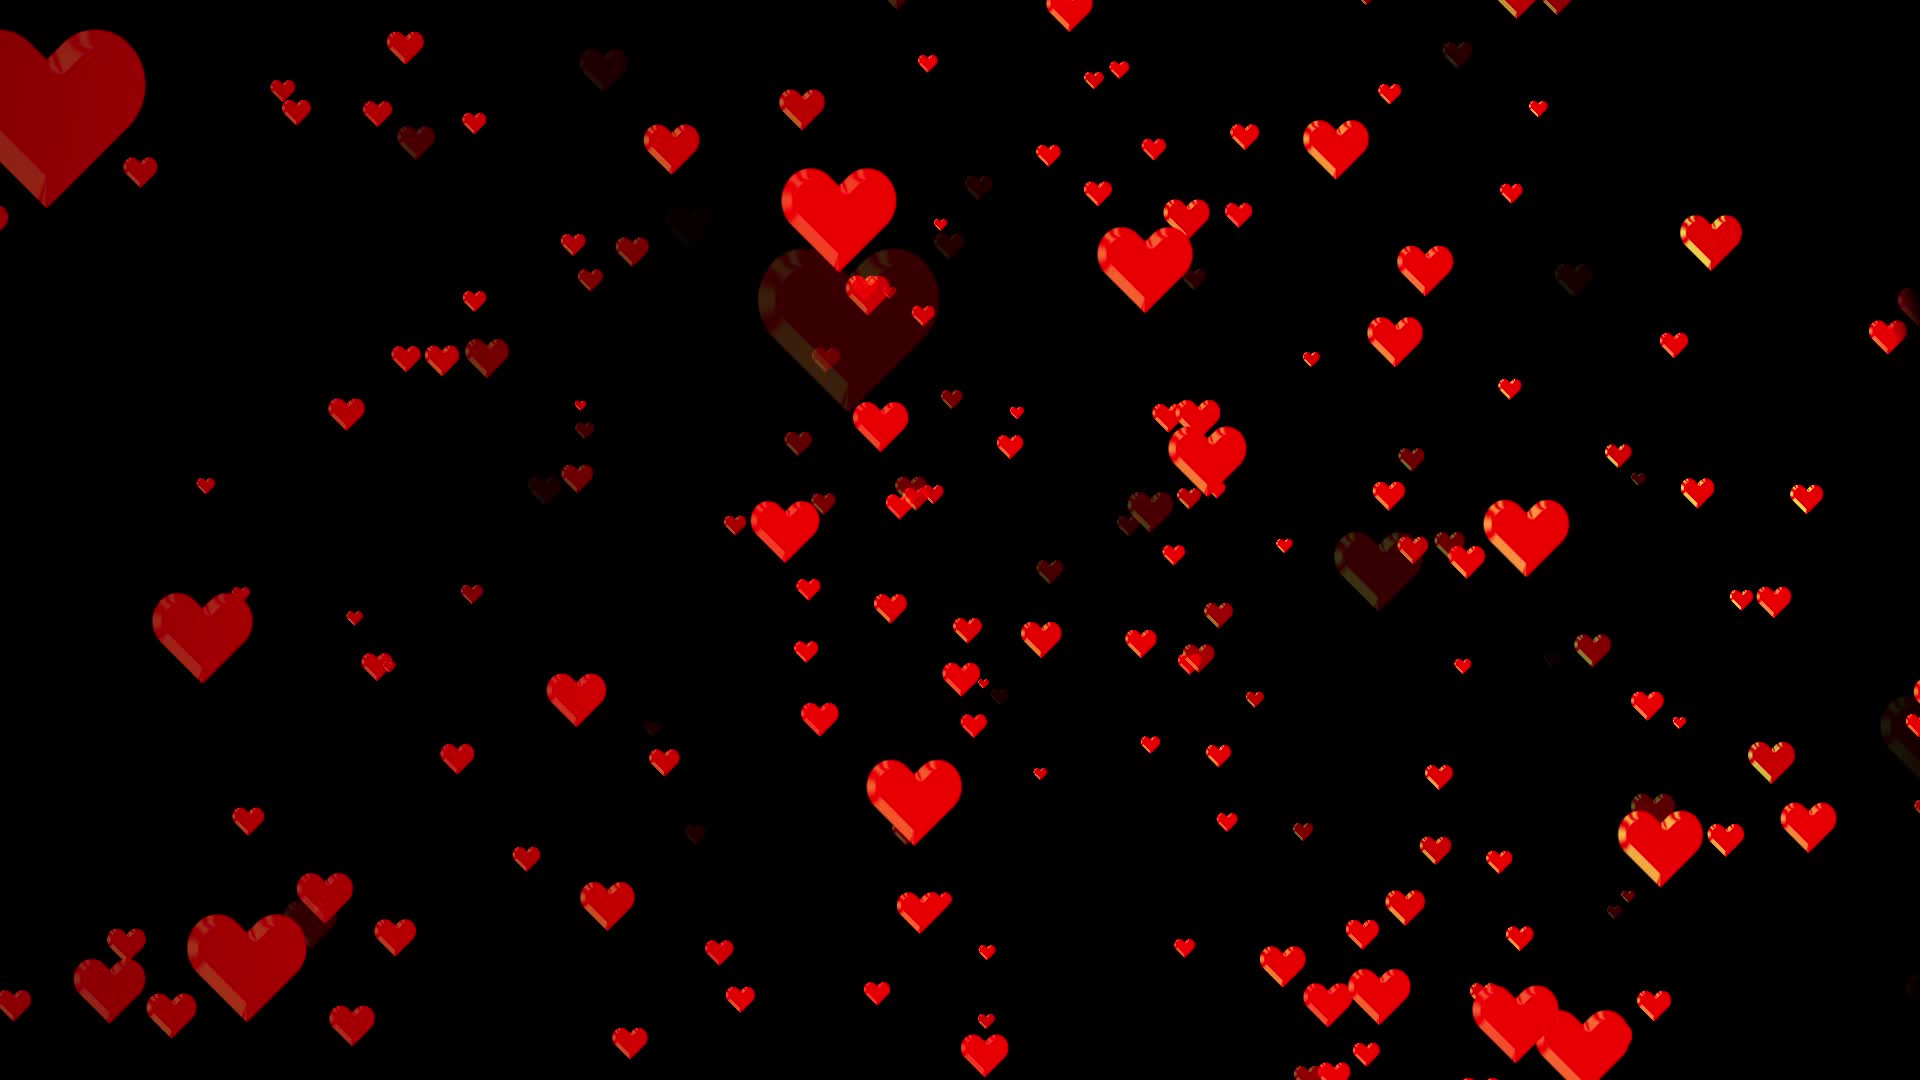 Random Flying Love Heart Background Animation Effect on Black Background  4358898 Stock Video at Vecteezy